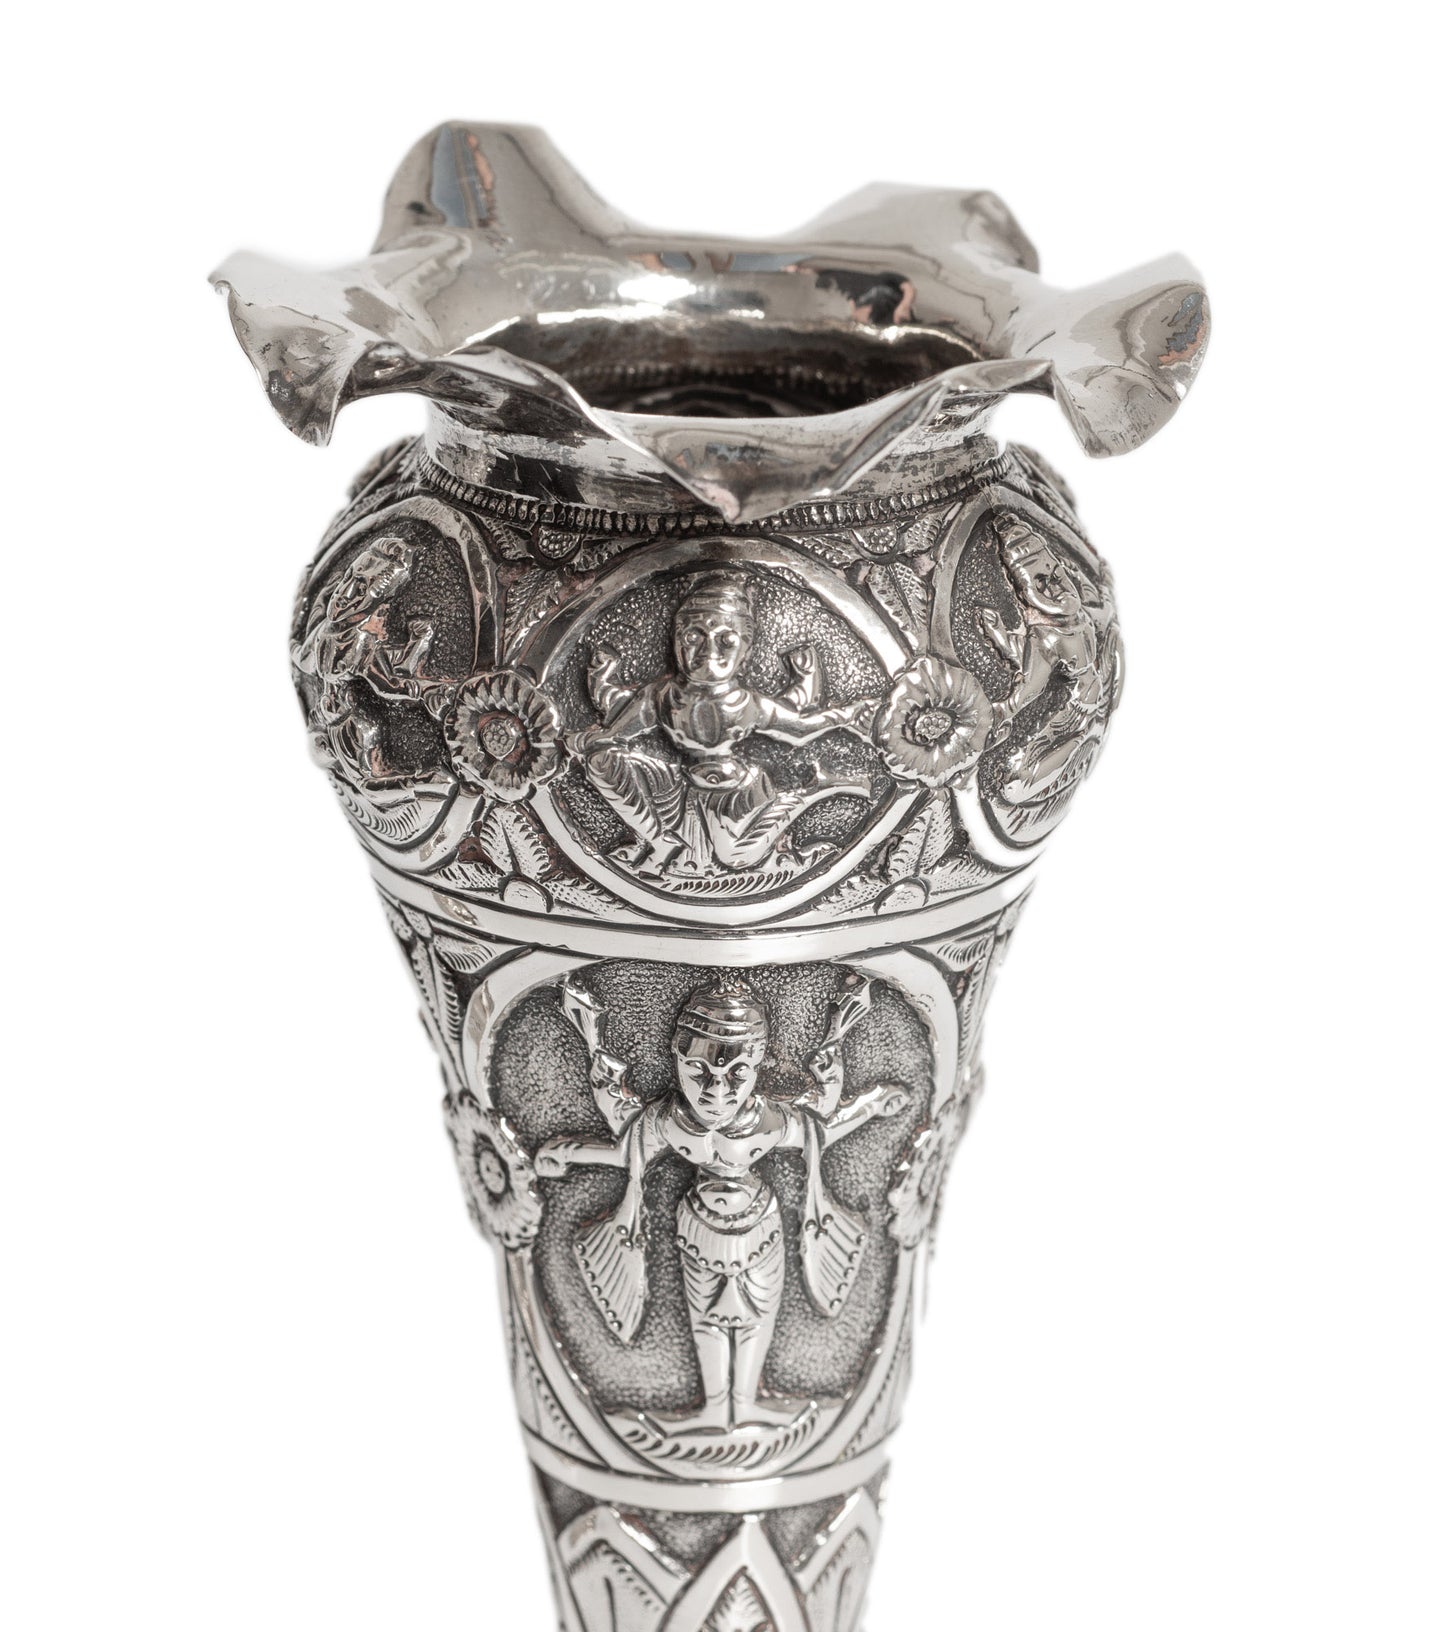 Antique Indian Swami Silver Vases with Hindu Deities - Madras Region c1880 (Code 2763)